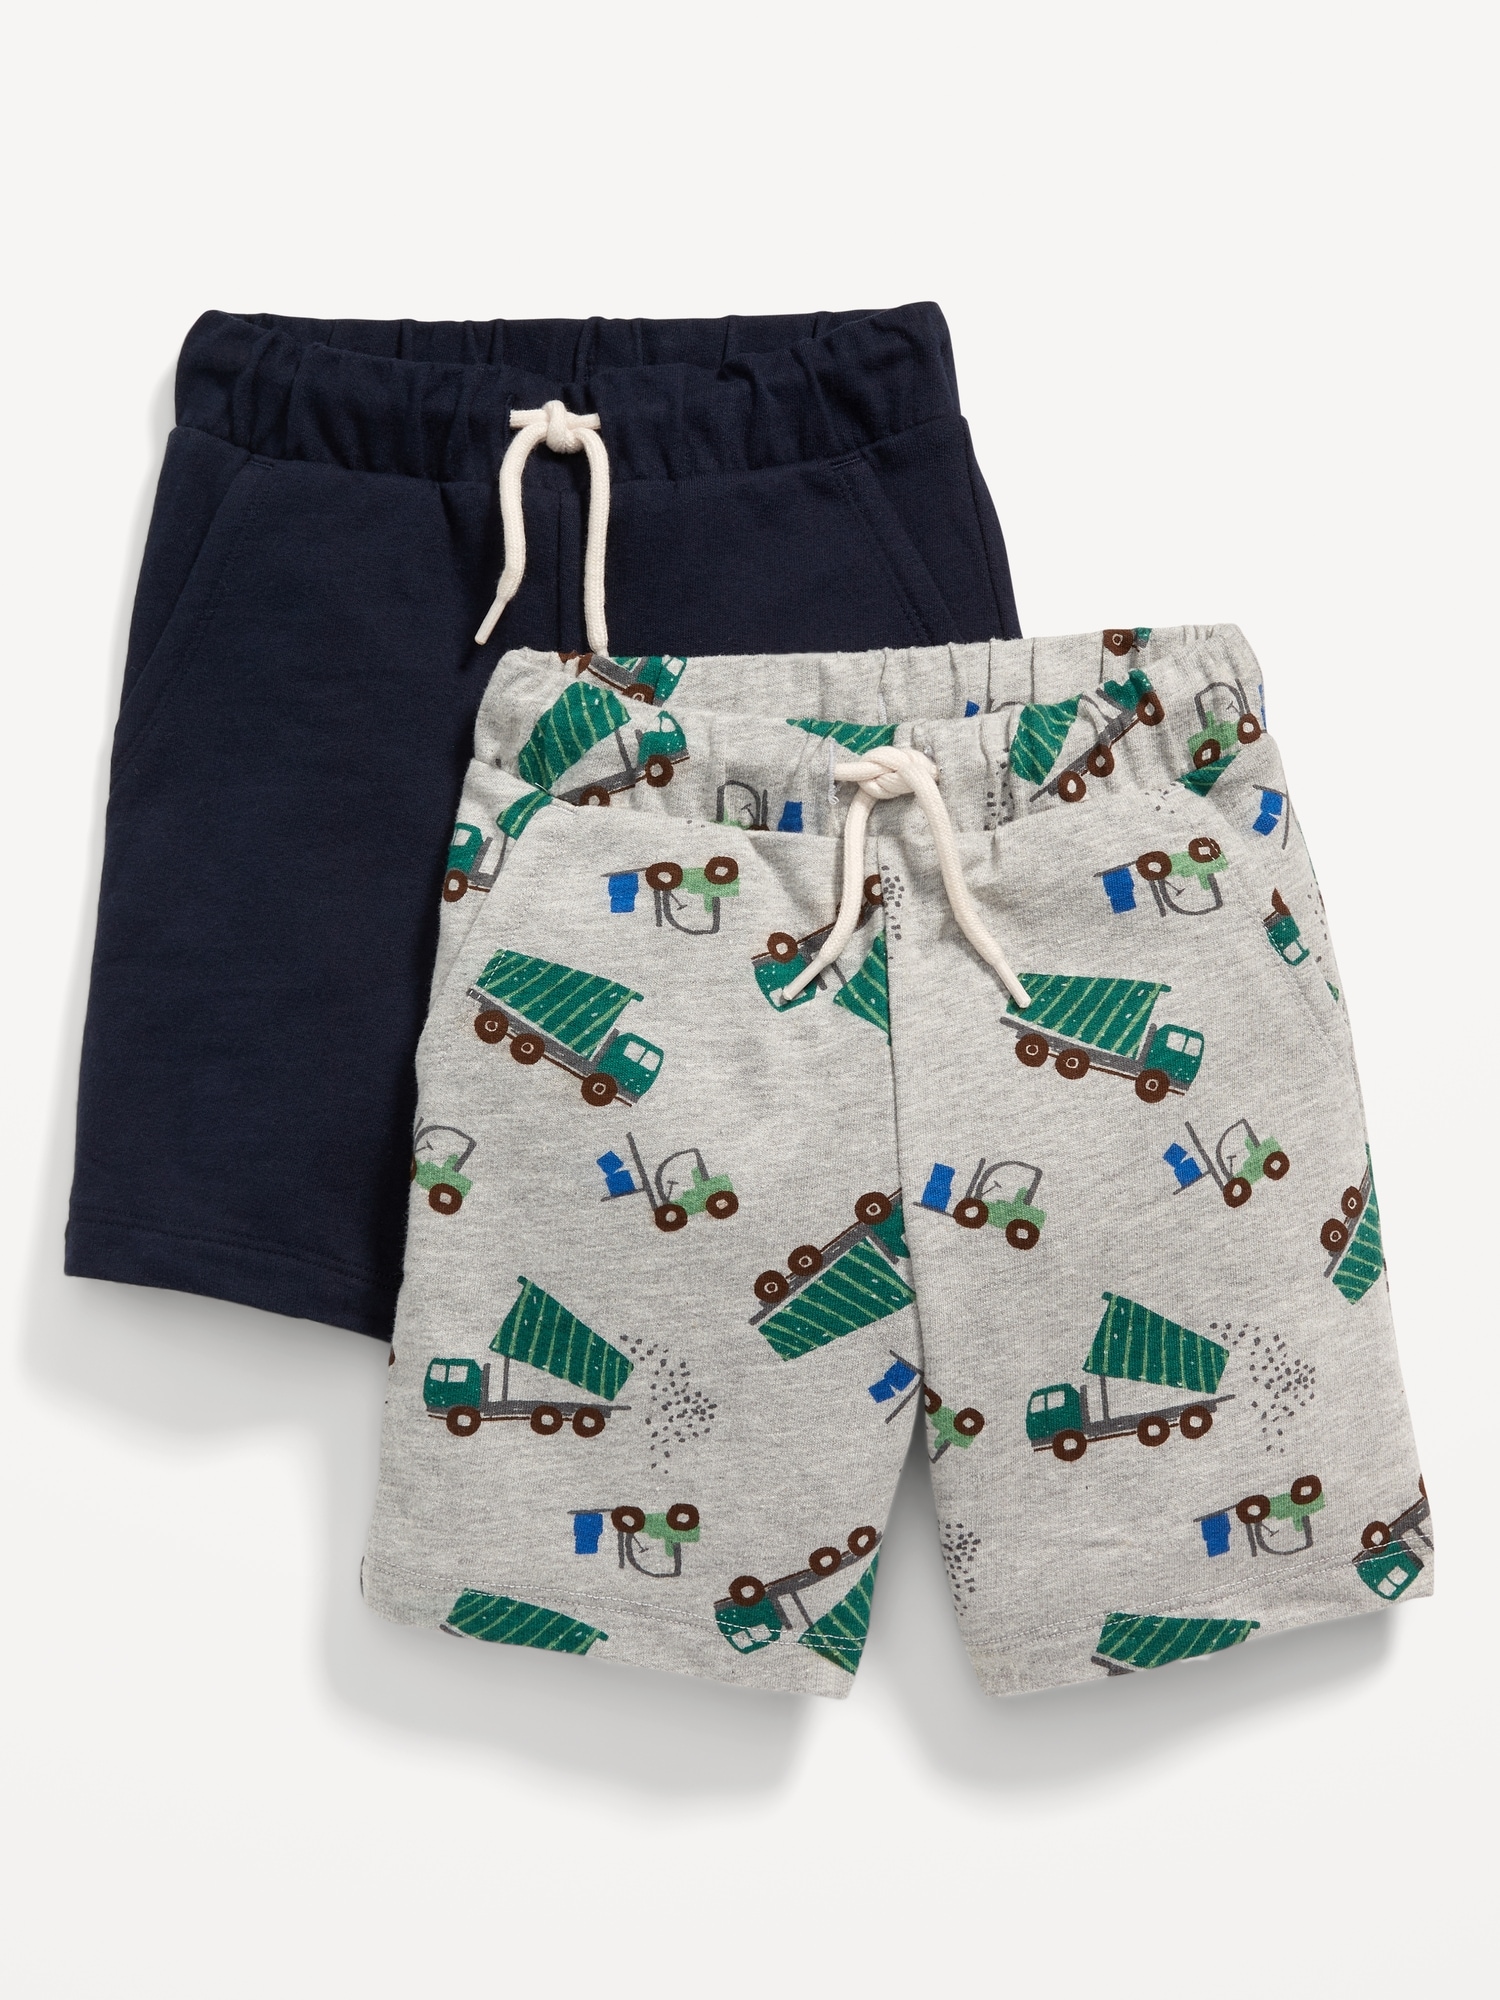 2-Pack Functional-Drawstring Shorts for Toddler Boys Hot Deal